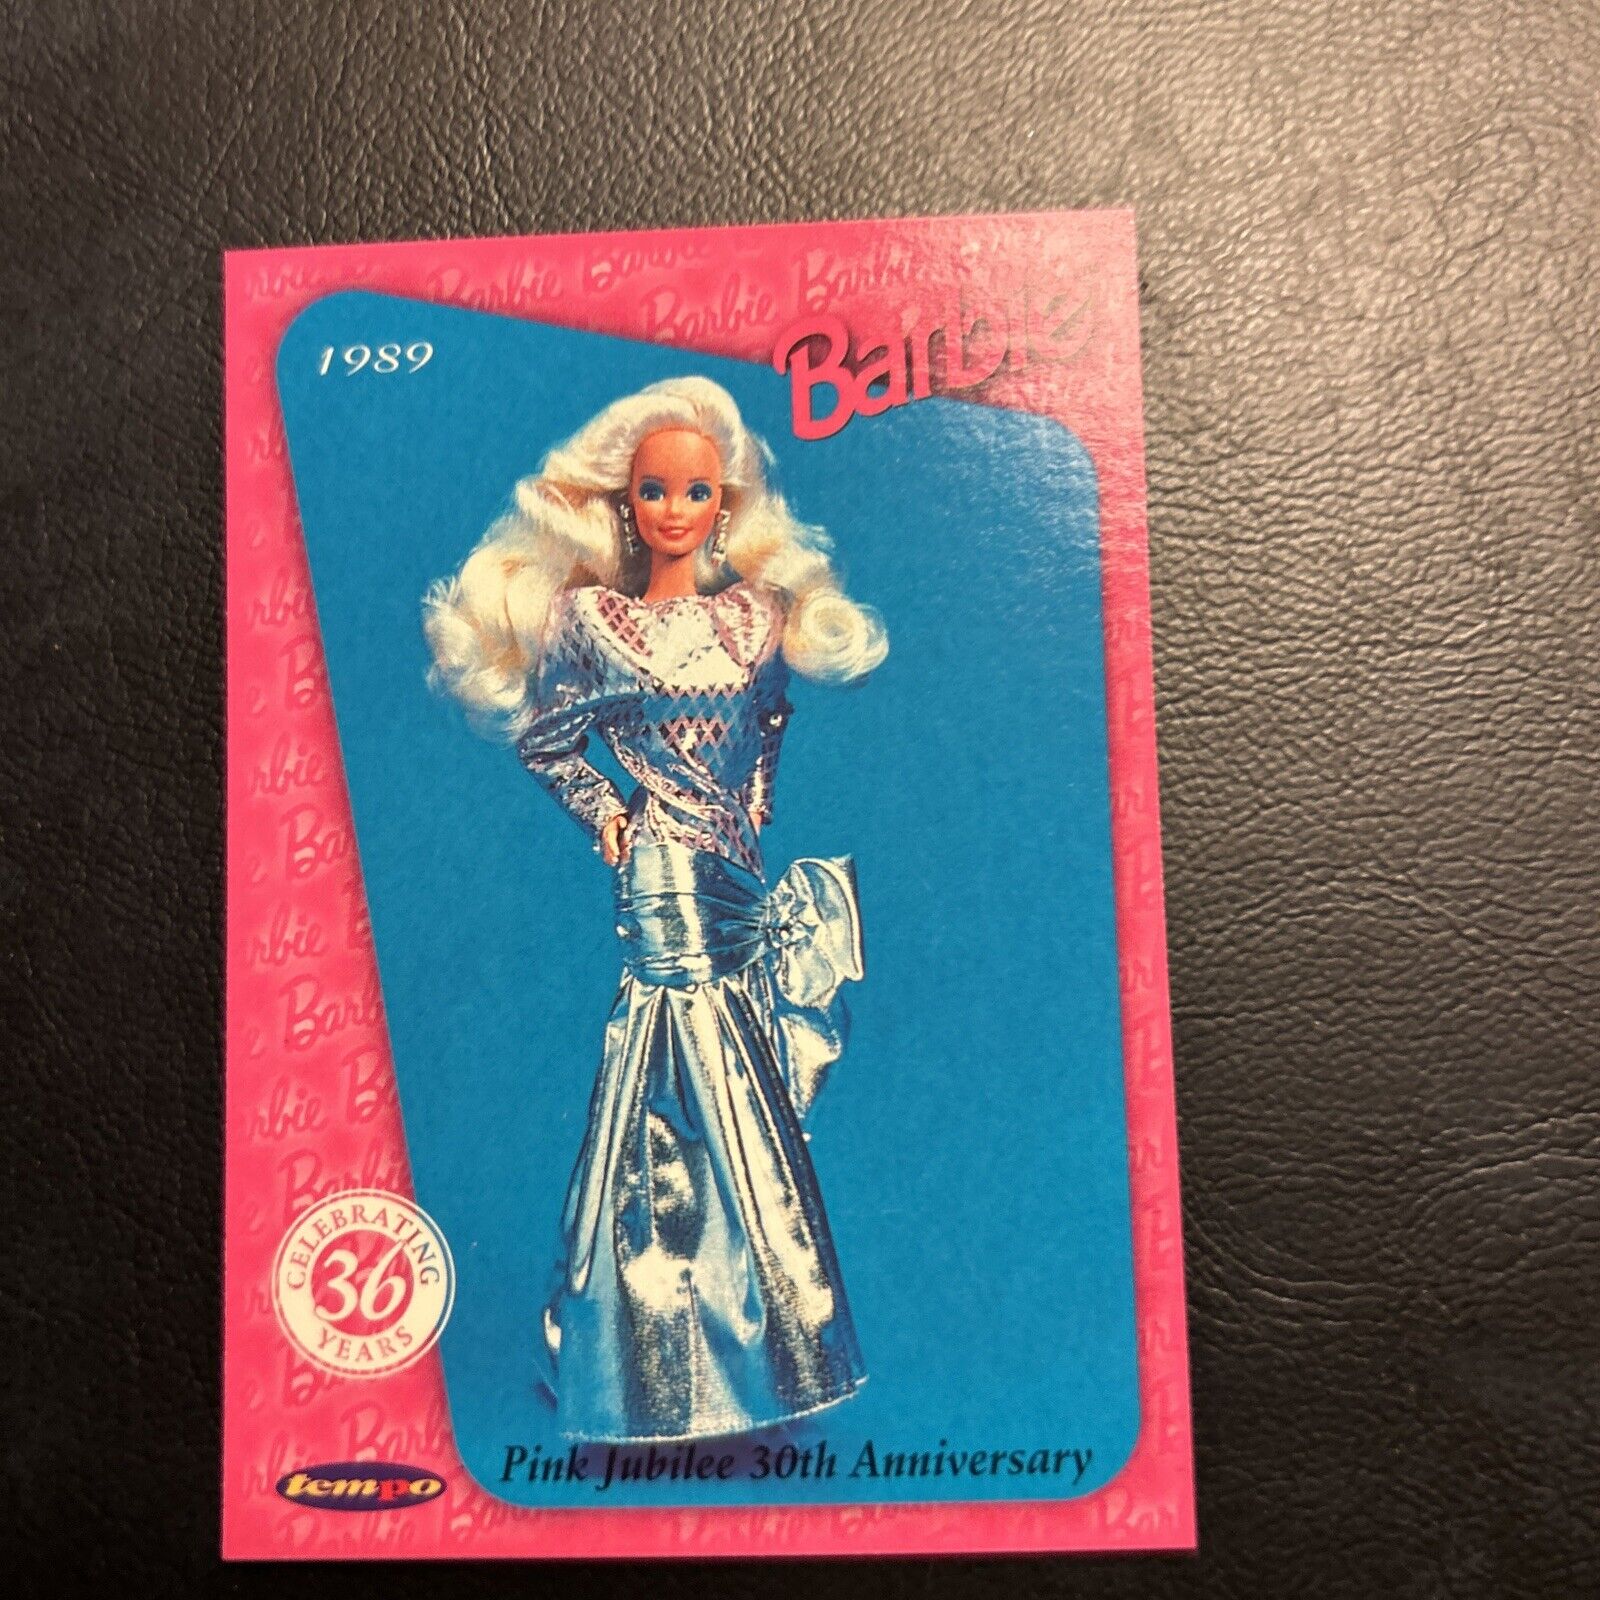 Jb9c Barbie Doll Celebrating 36 Years #59 Pink Jubilee 30Th Anniversary, 1989